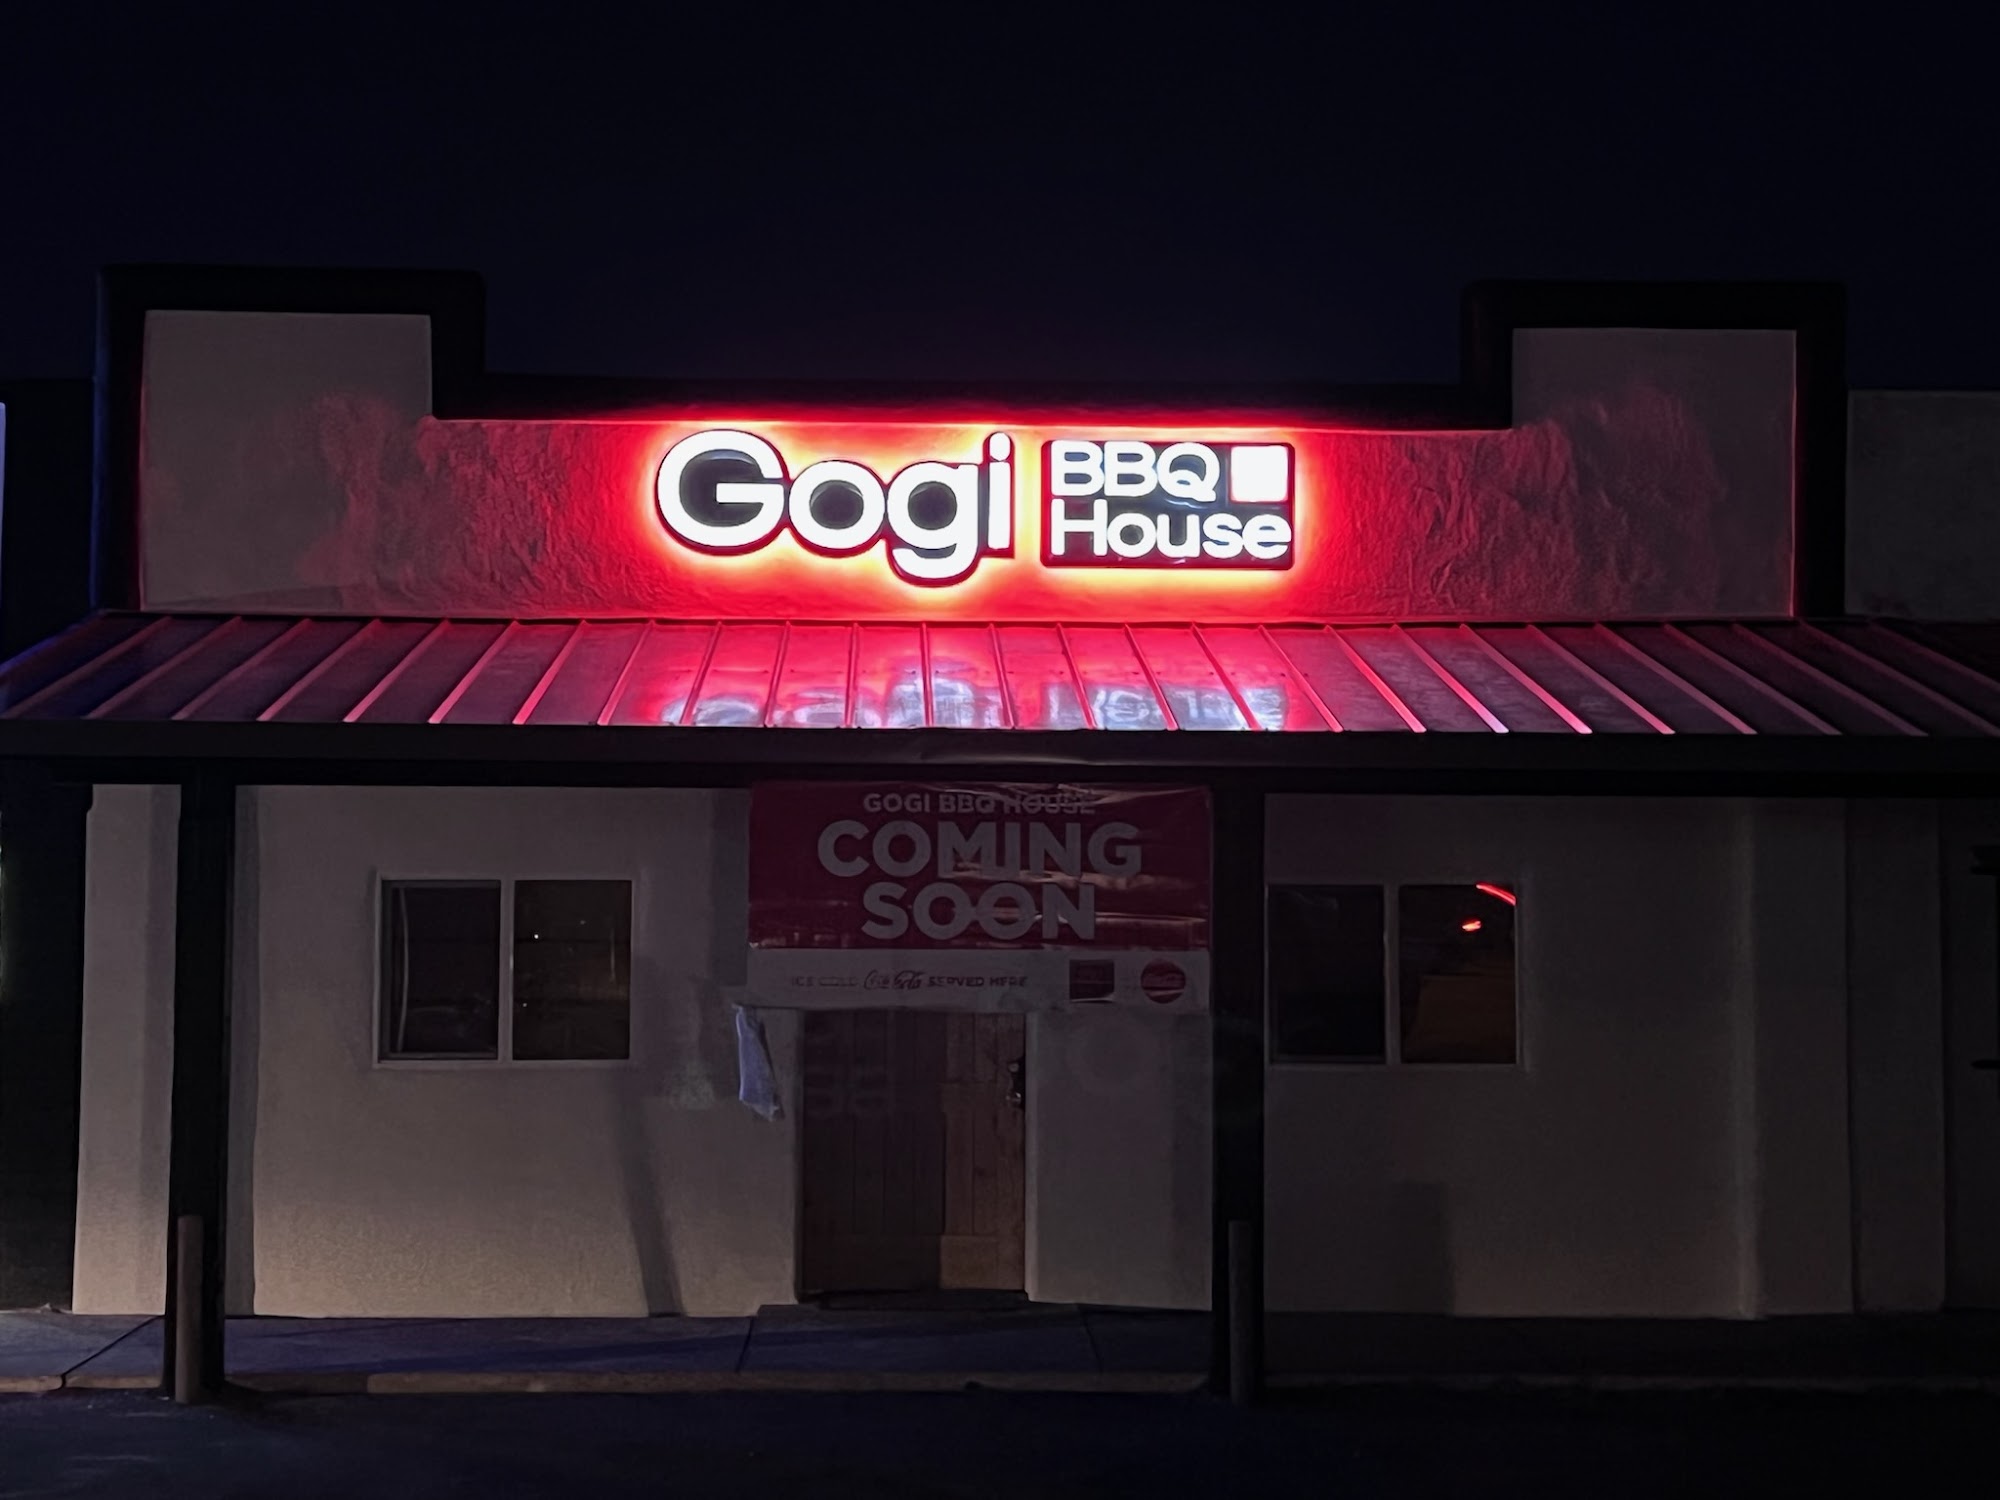 Gogi BBQ House